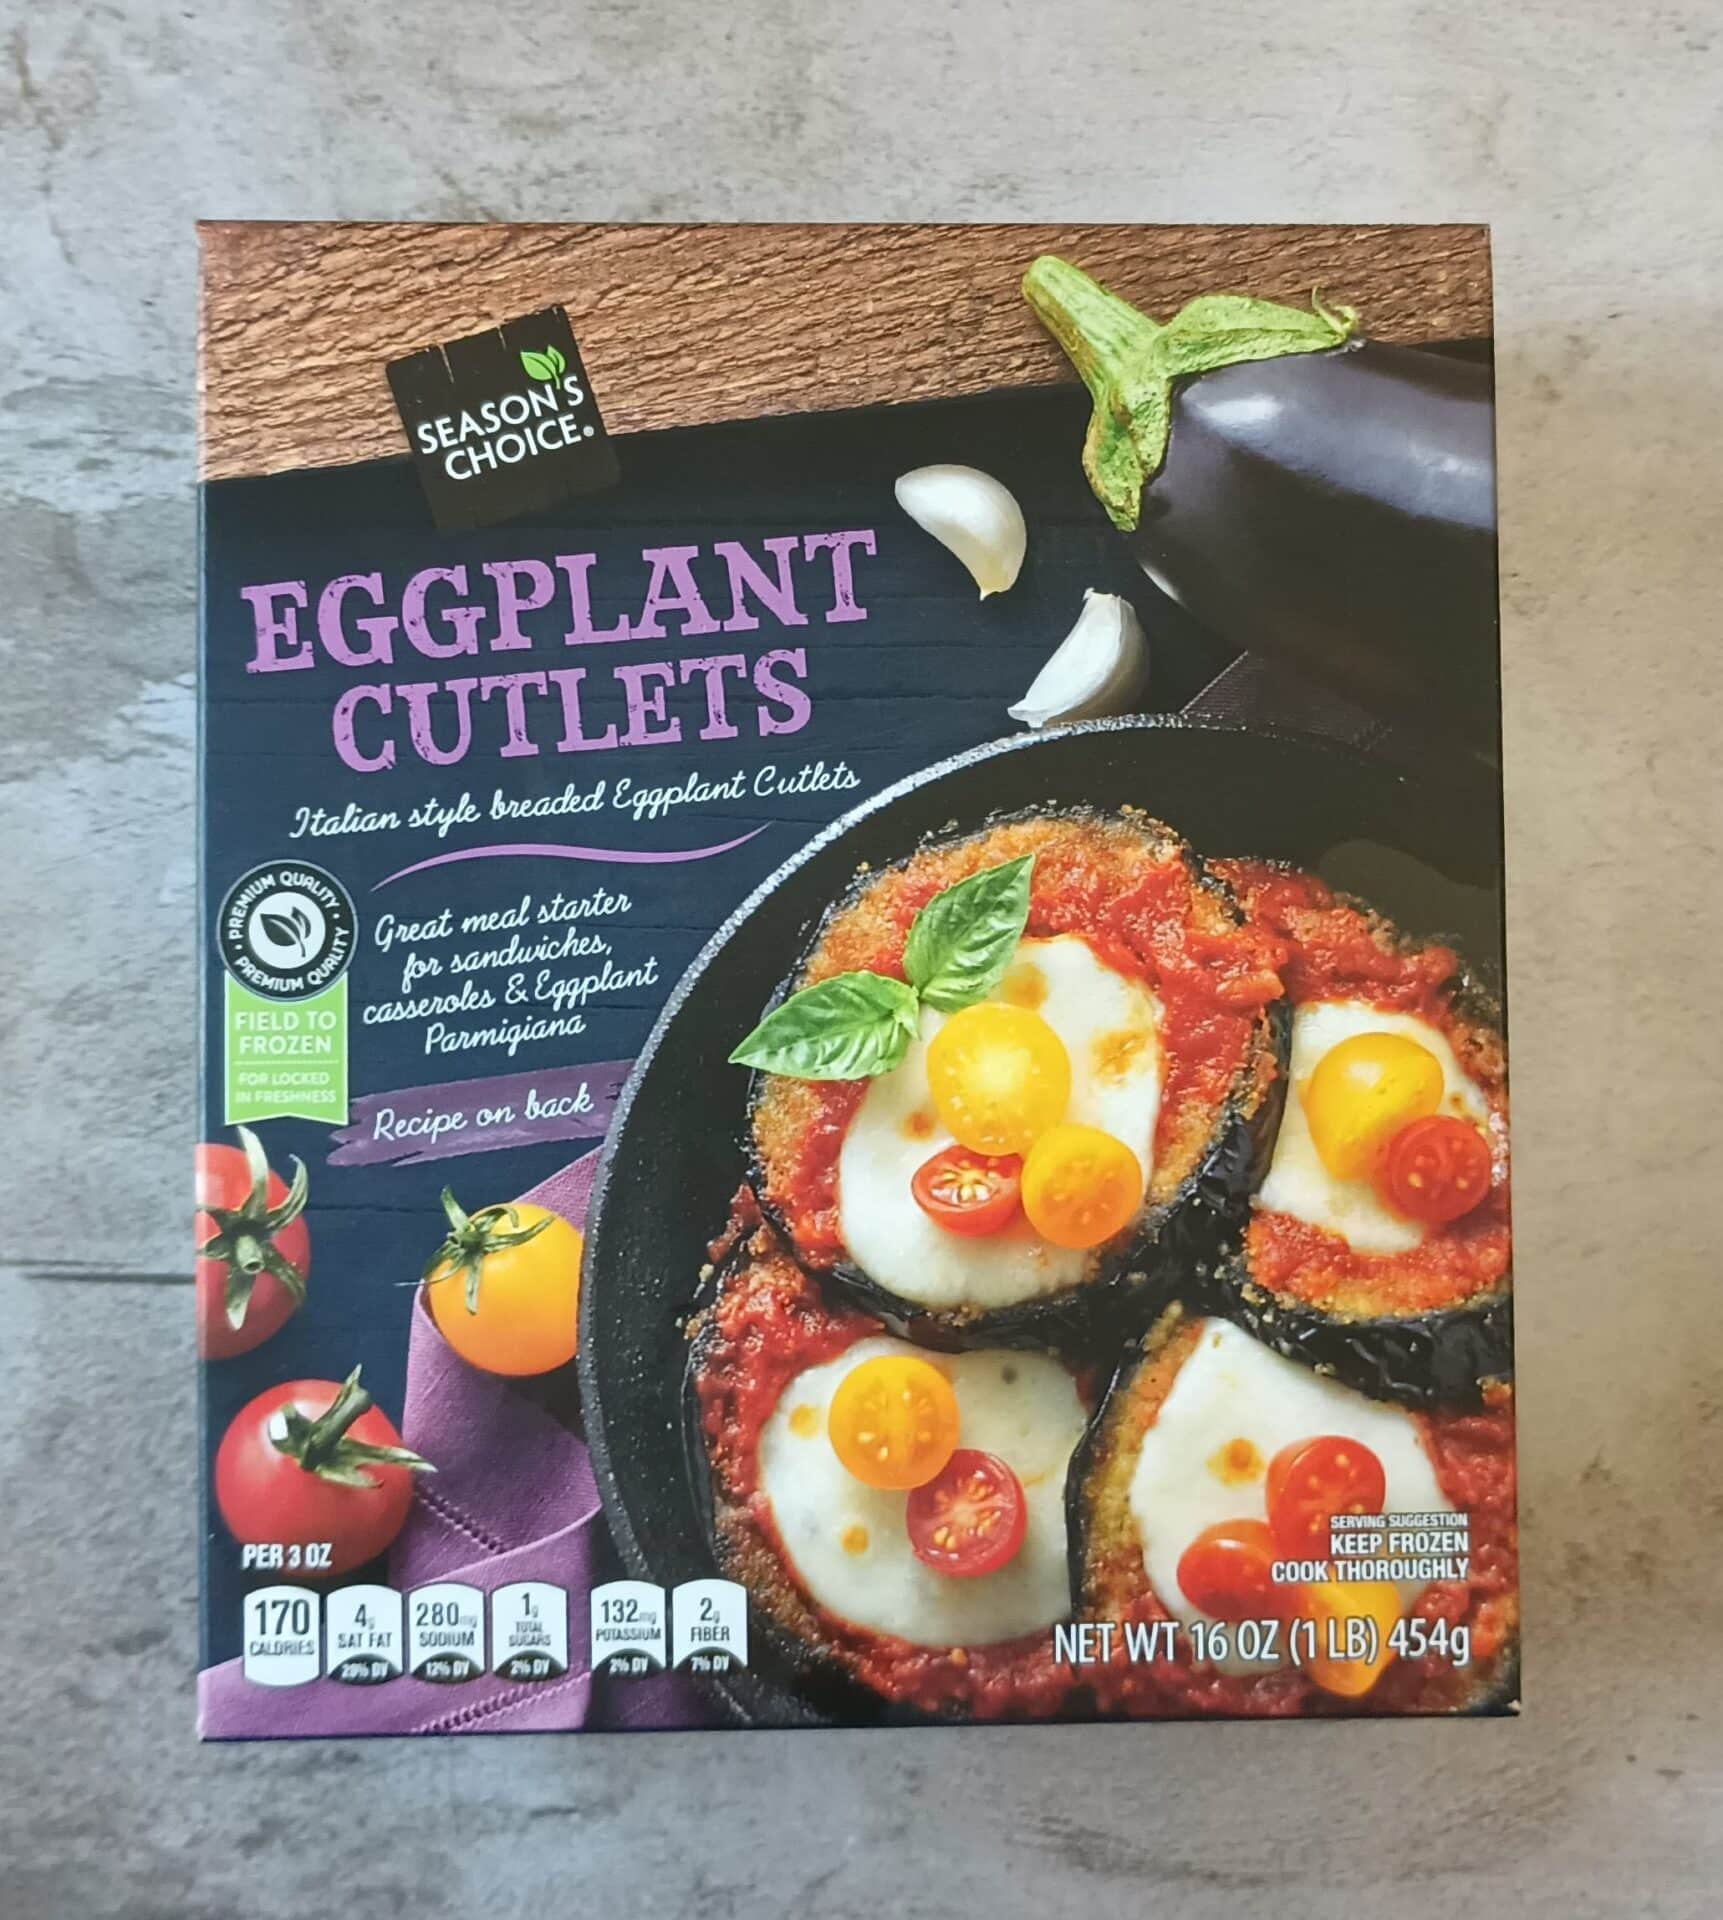 Season's Choice Eggplant Cutlets